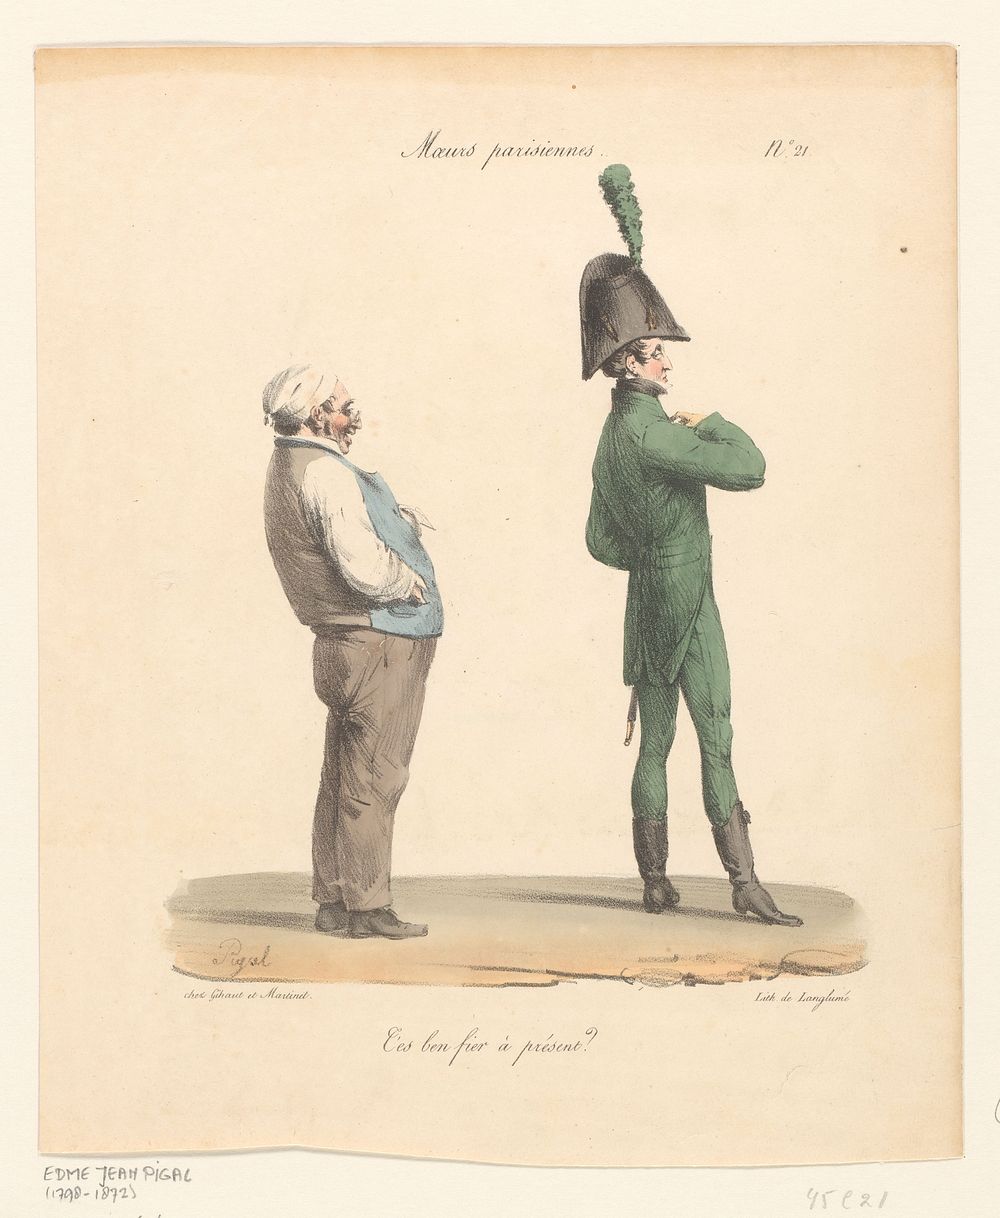 Oudere man lacht om het kostuum van jongere man (1825) by Edme Jean Pigal, Pierre Langlumé and Gihaut et Martinet